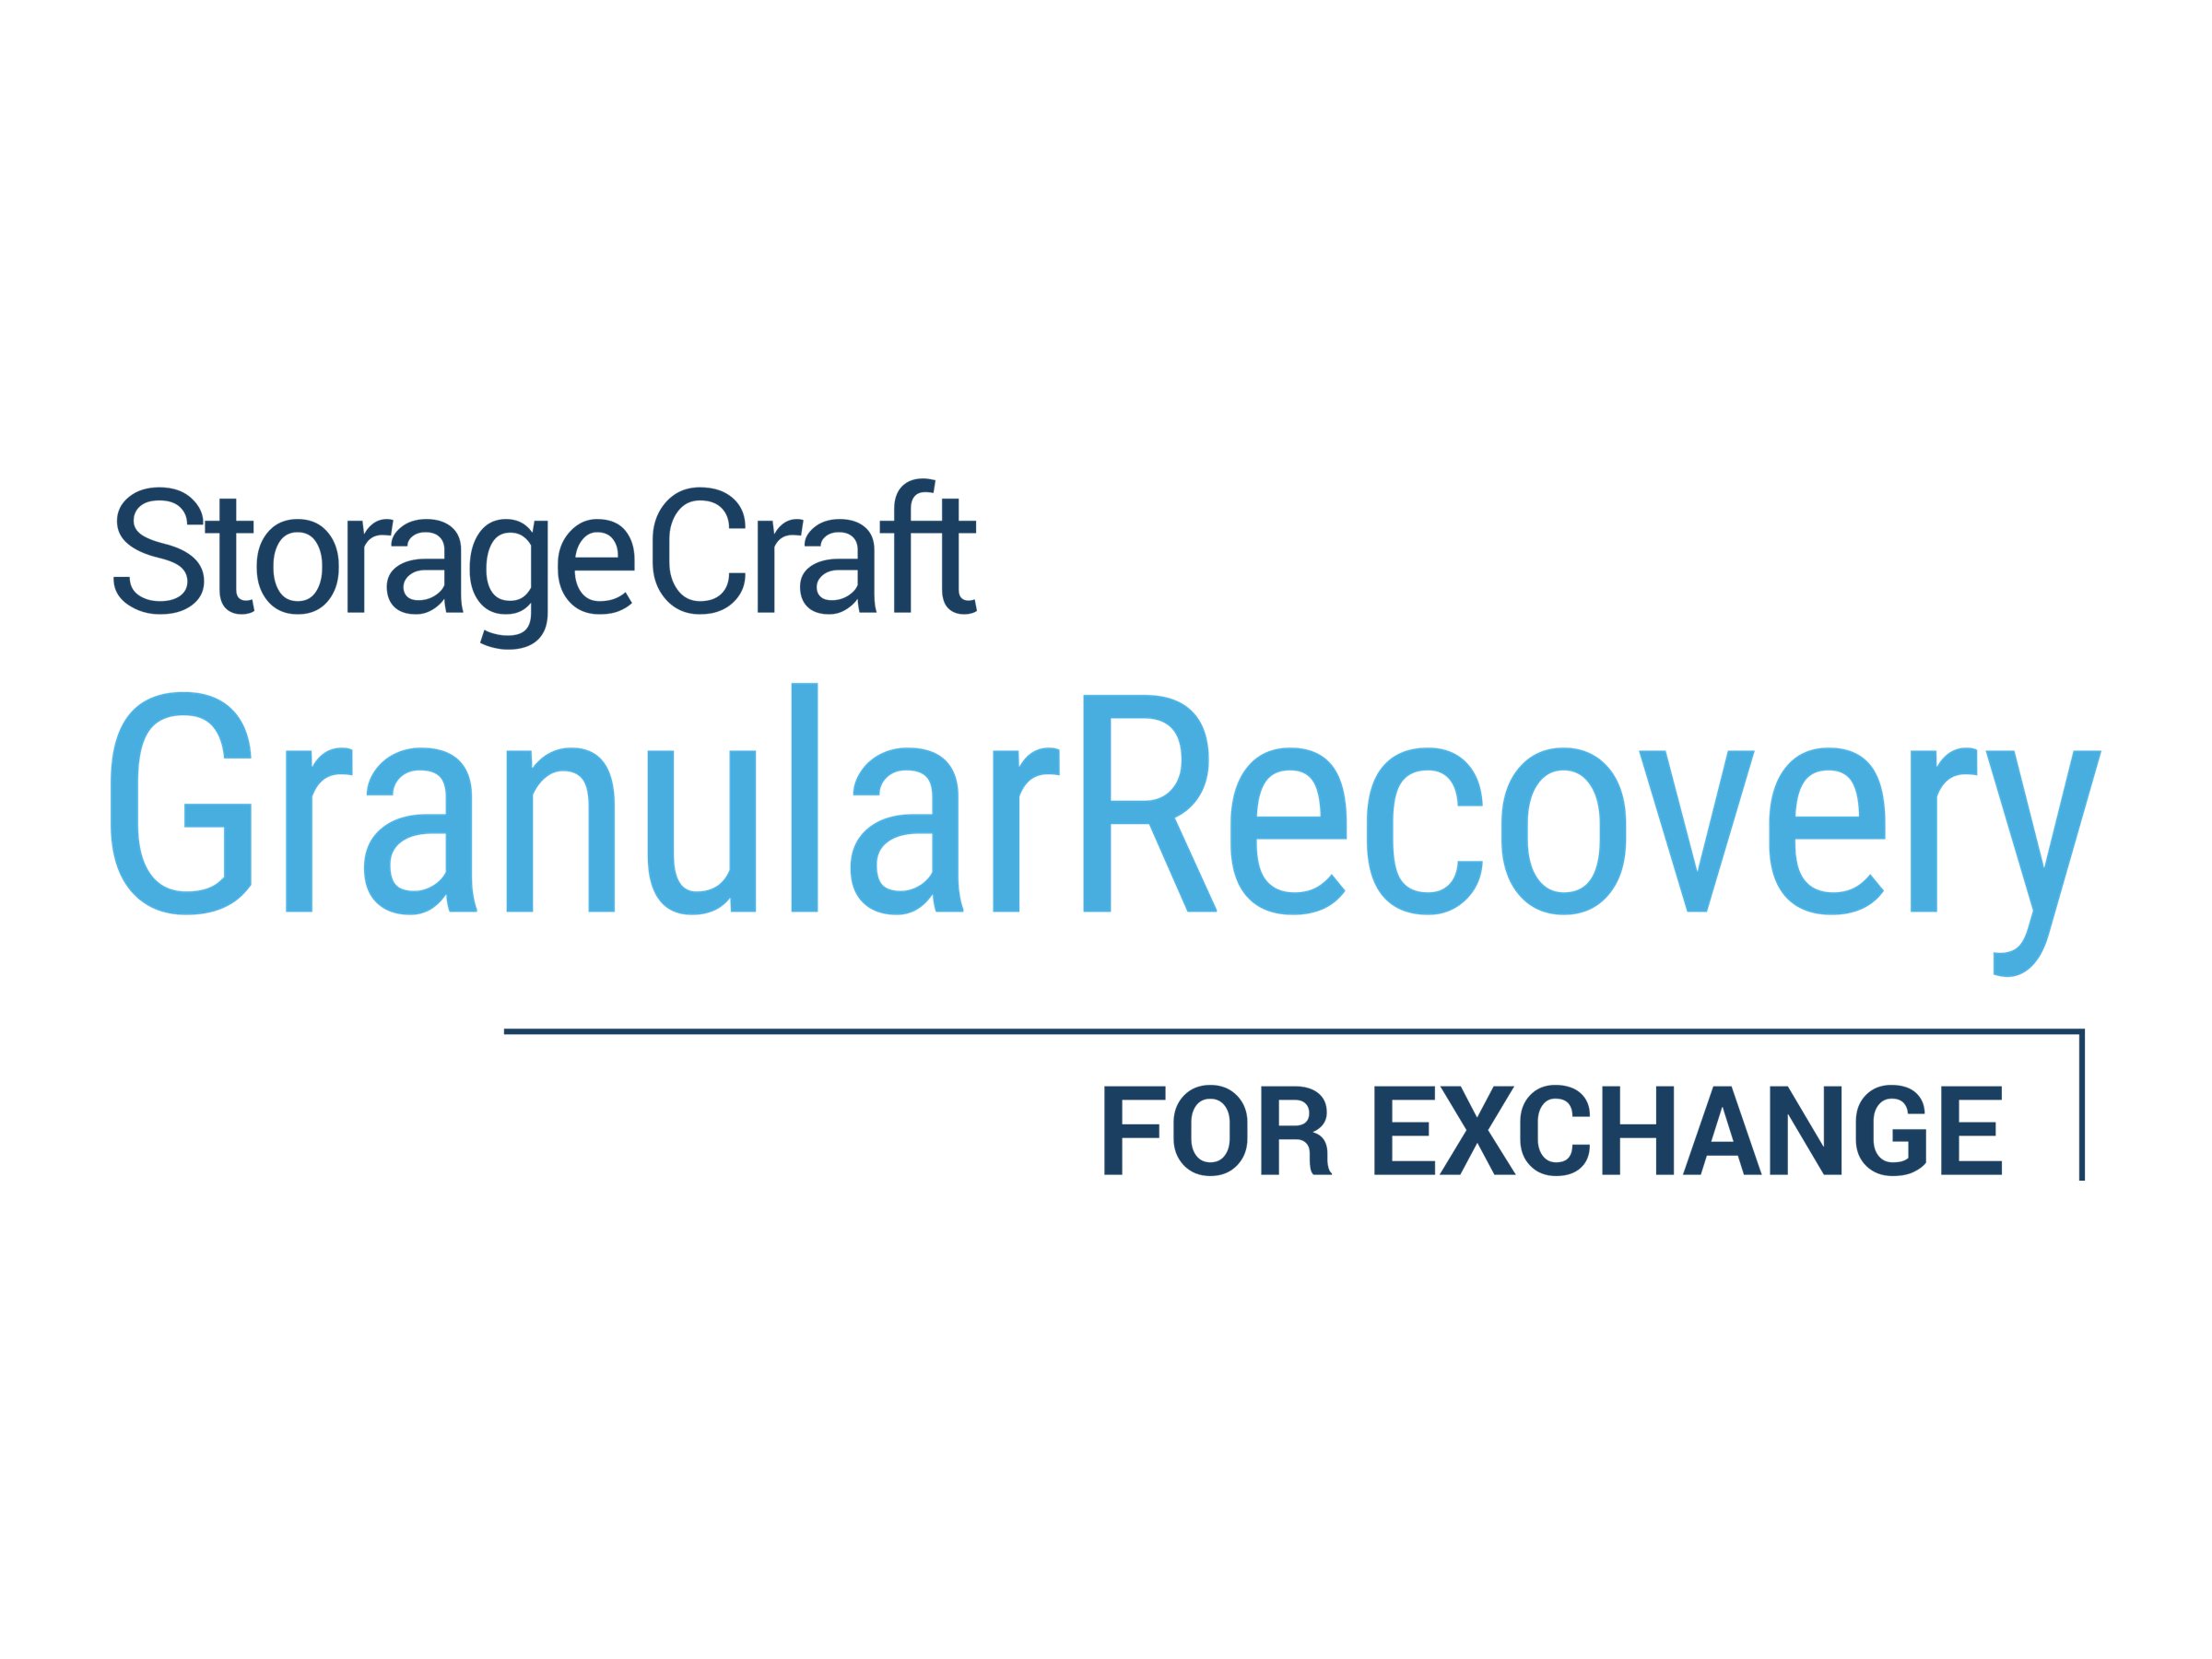 StorageCraft Granular Recovery for Exchange - Upgrade-Lizenz - 250 Postfcher - Win